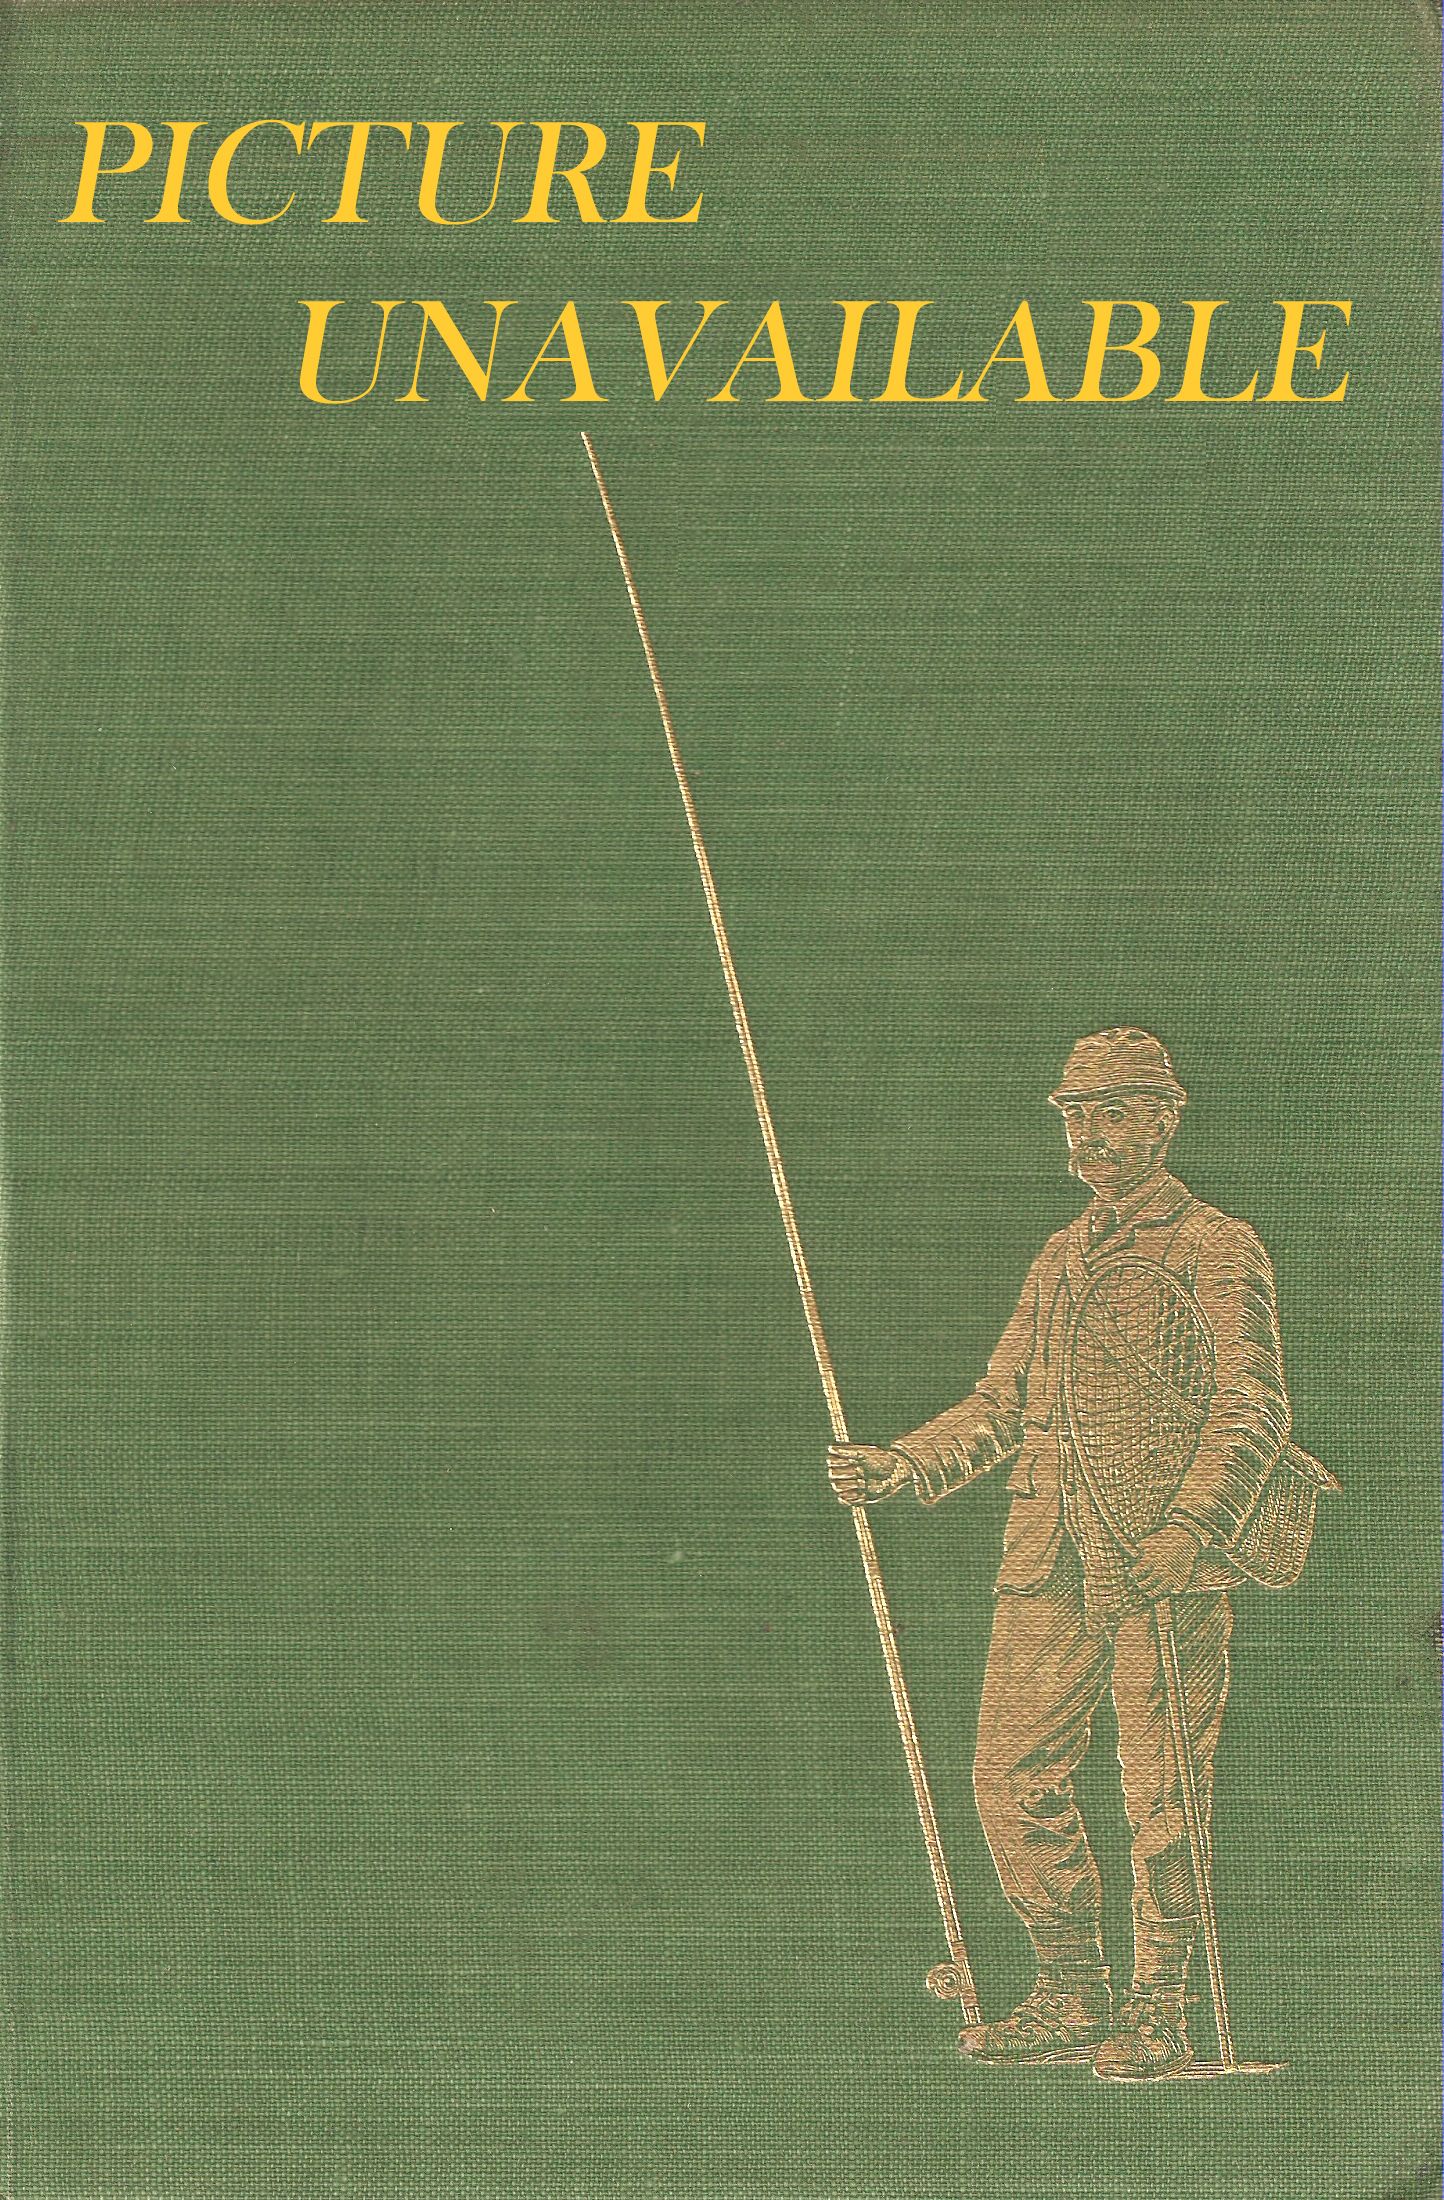 CREEL: A FISHING MAGAZINE. Volume 3, number 5. November 1965.